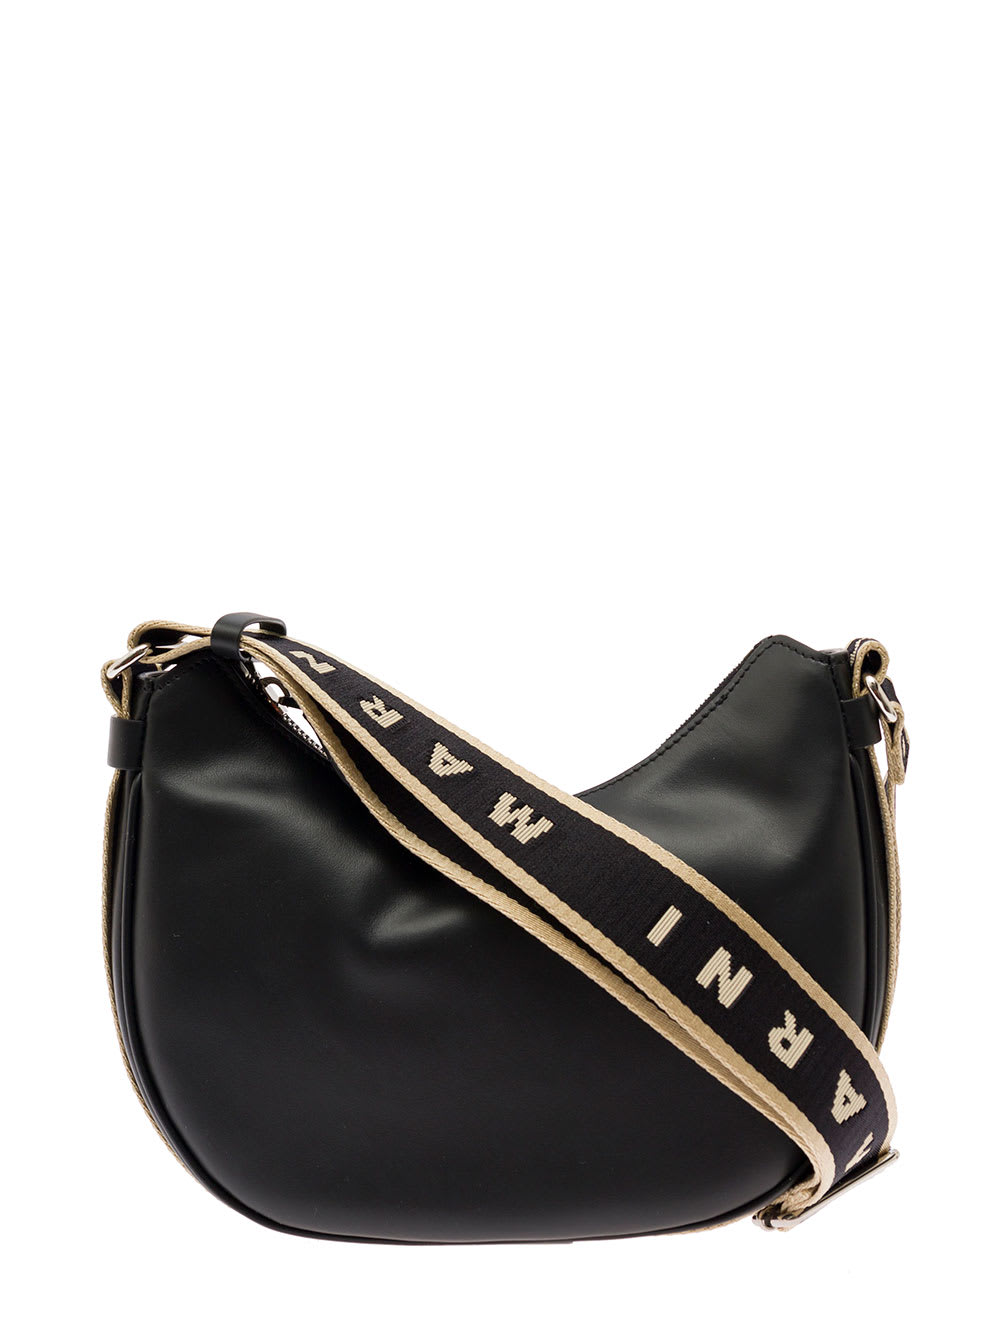 Black Venice patent-leather bag, Marni